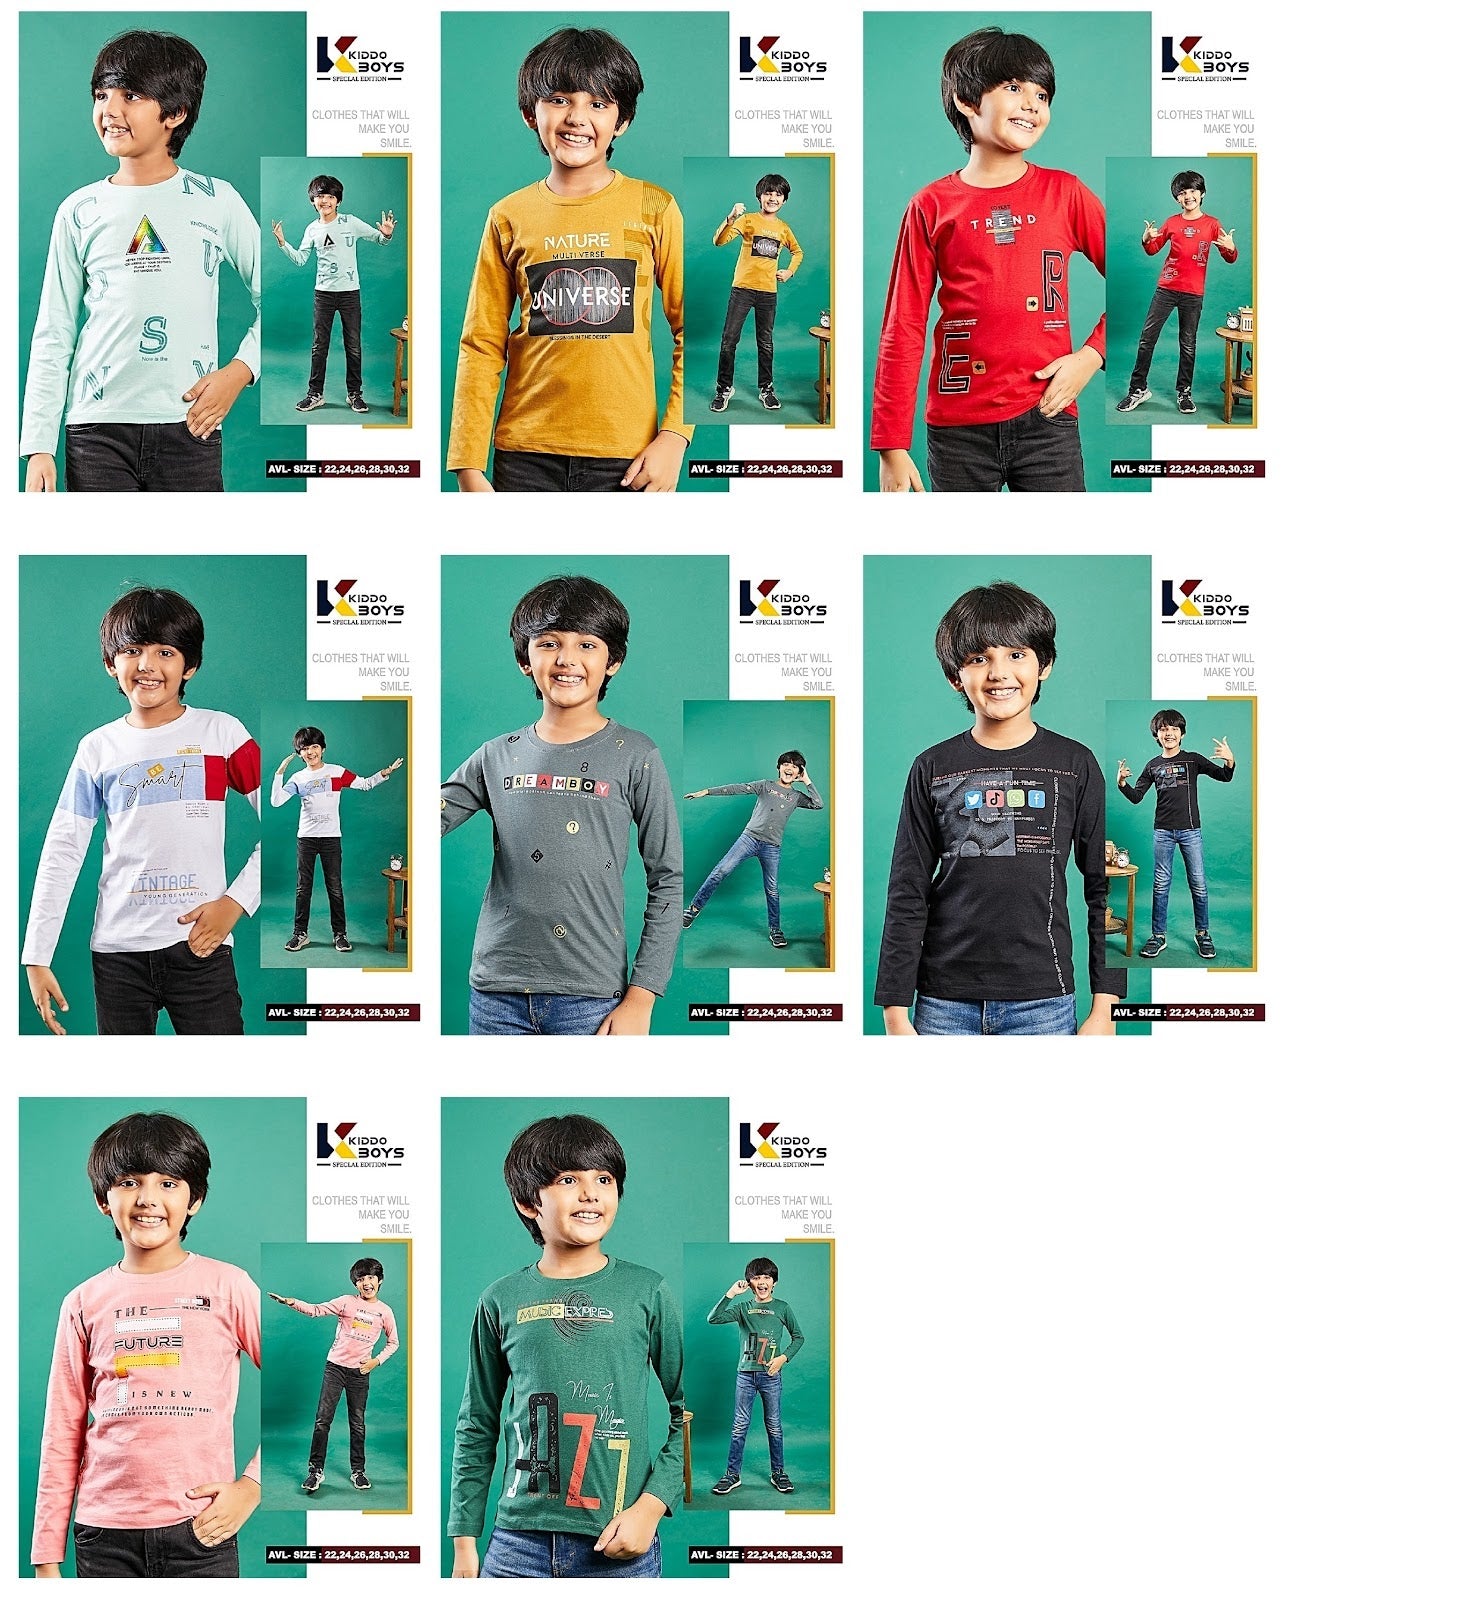 Design 4 Kiddo Boys Tshirt